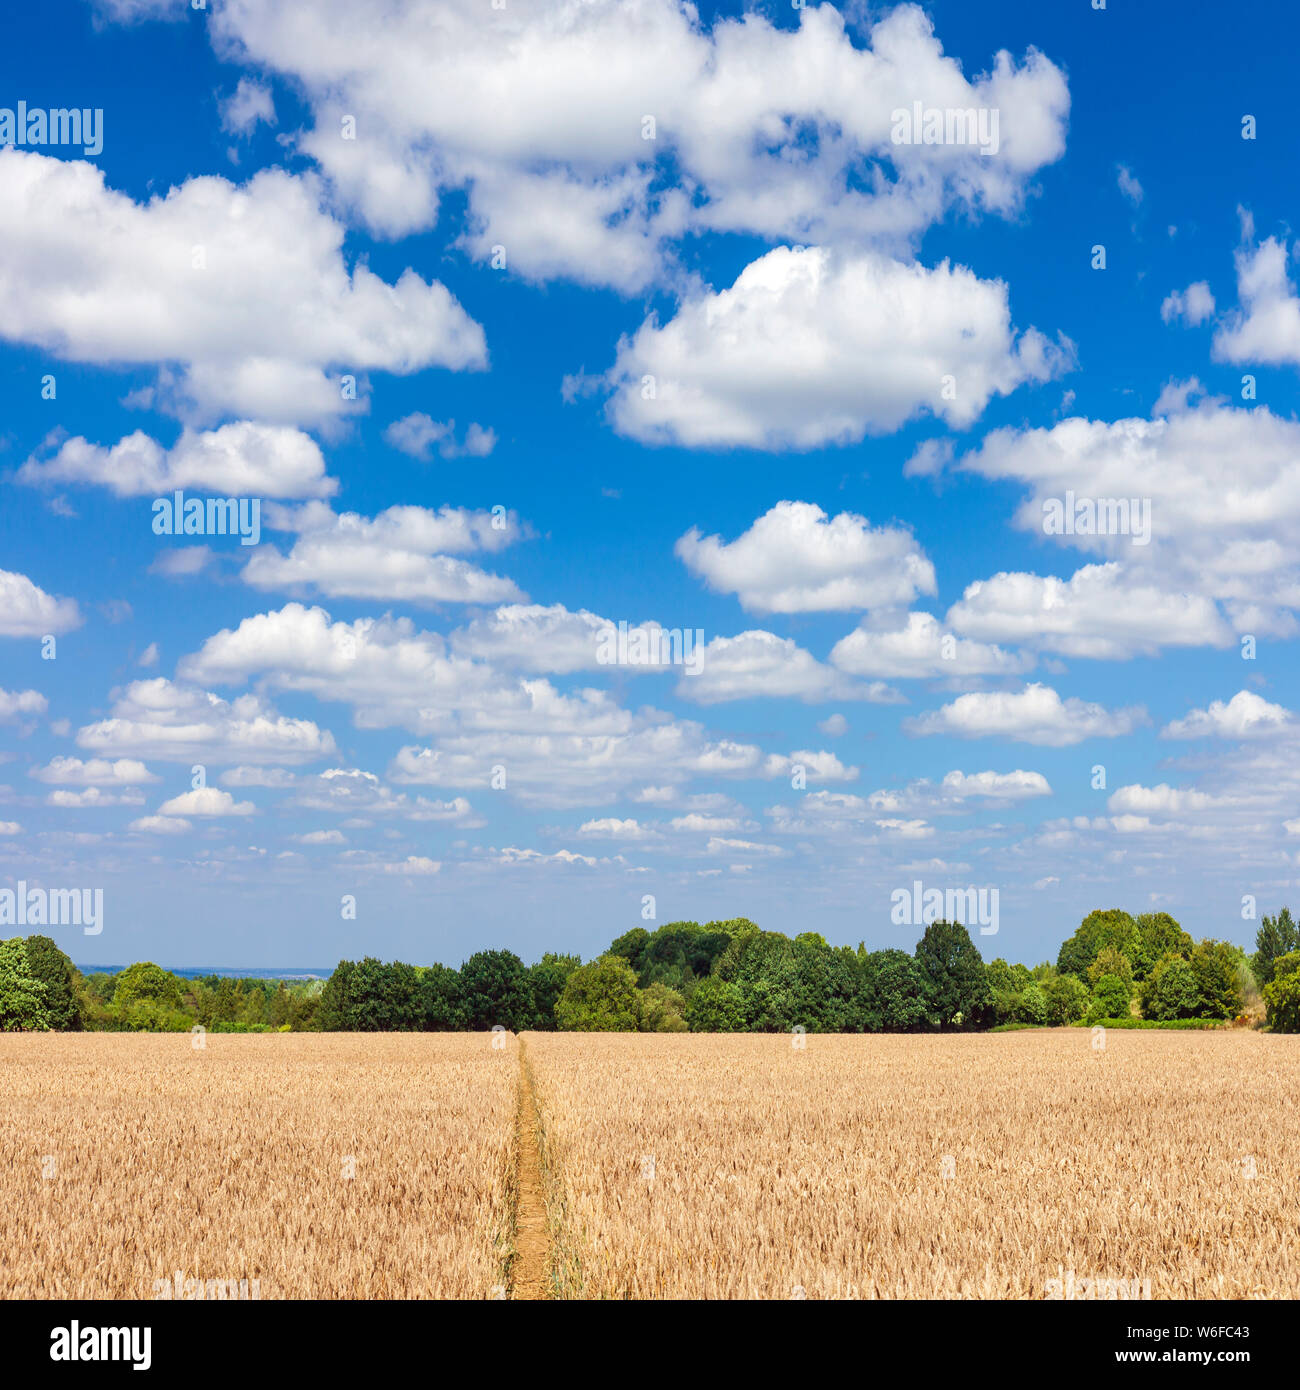 Weizenfeld unter fairen Wetter Wolken, Kent, Großbritannien. Stockfoto